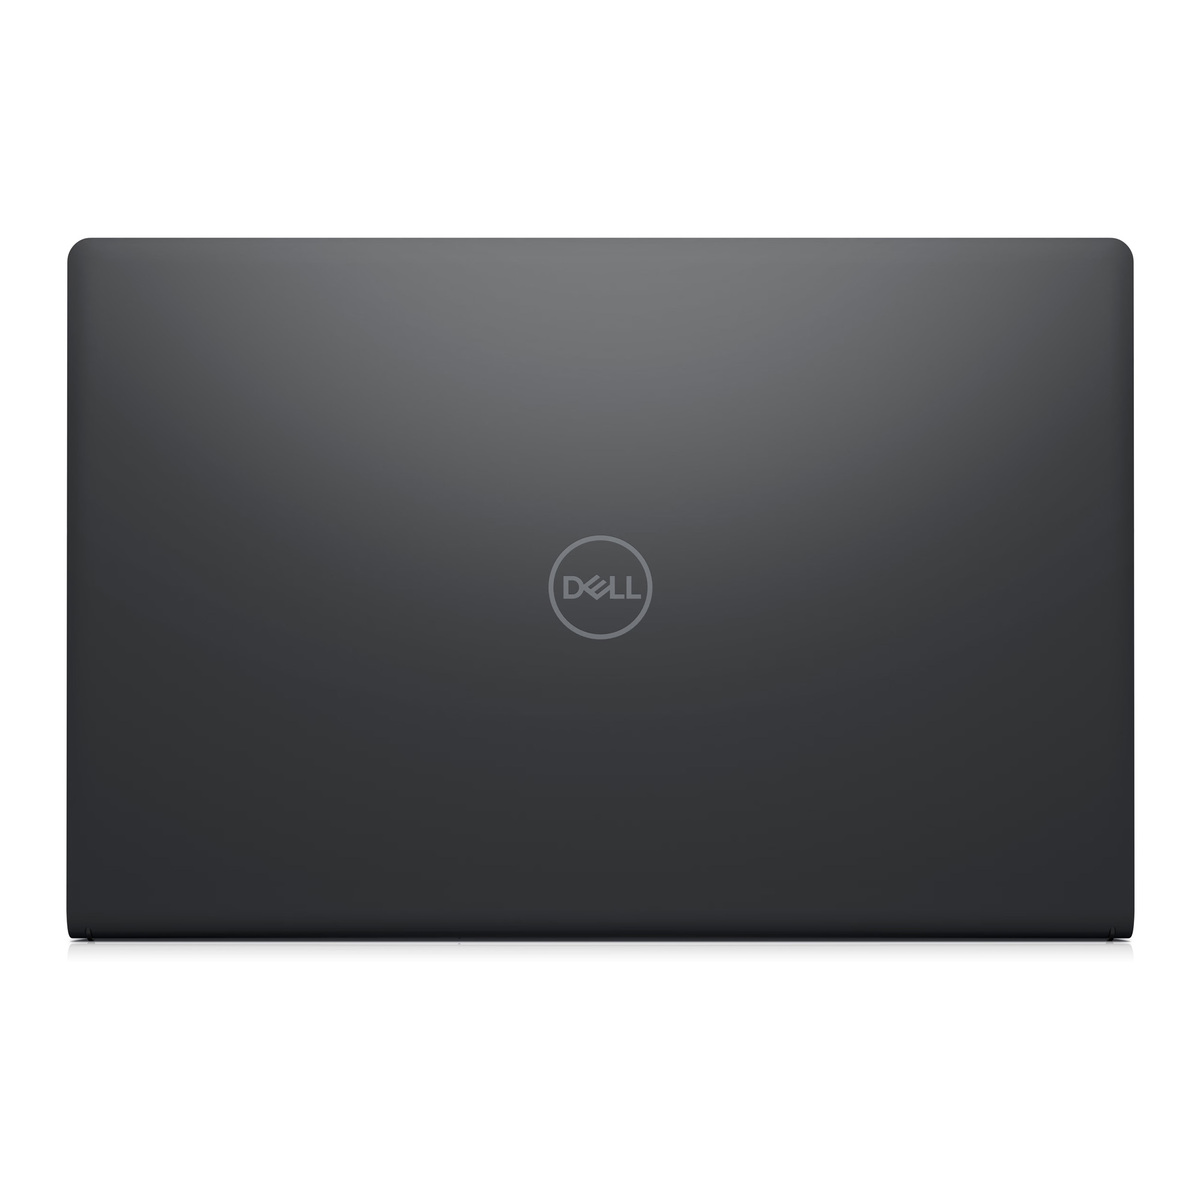 Dell Inspiron 15 Laptop, 15.6", FHD Display, Intel Core i5 Processor, Intel UHD Graphics, Windows 11 Home, 8 GB RAM, 512 GB Storage, Black, 3520-INS-1010